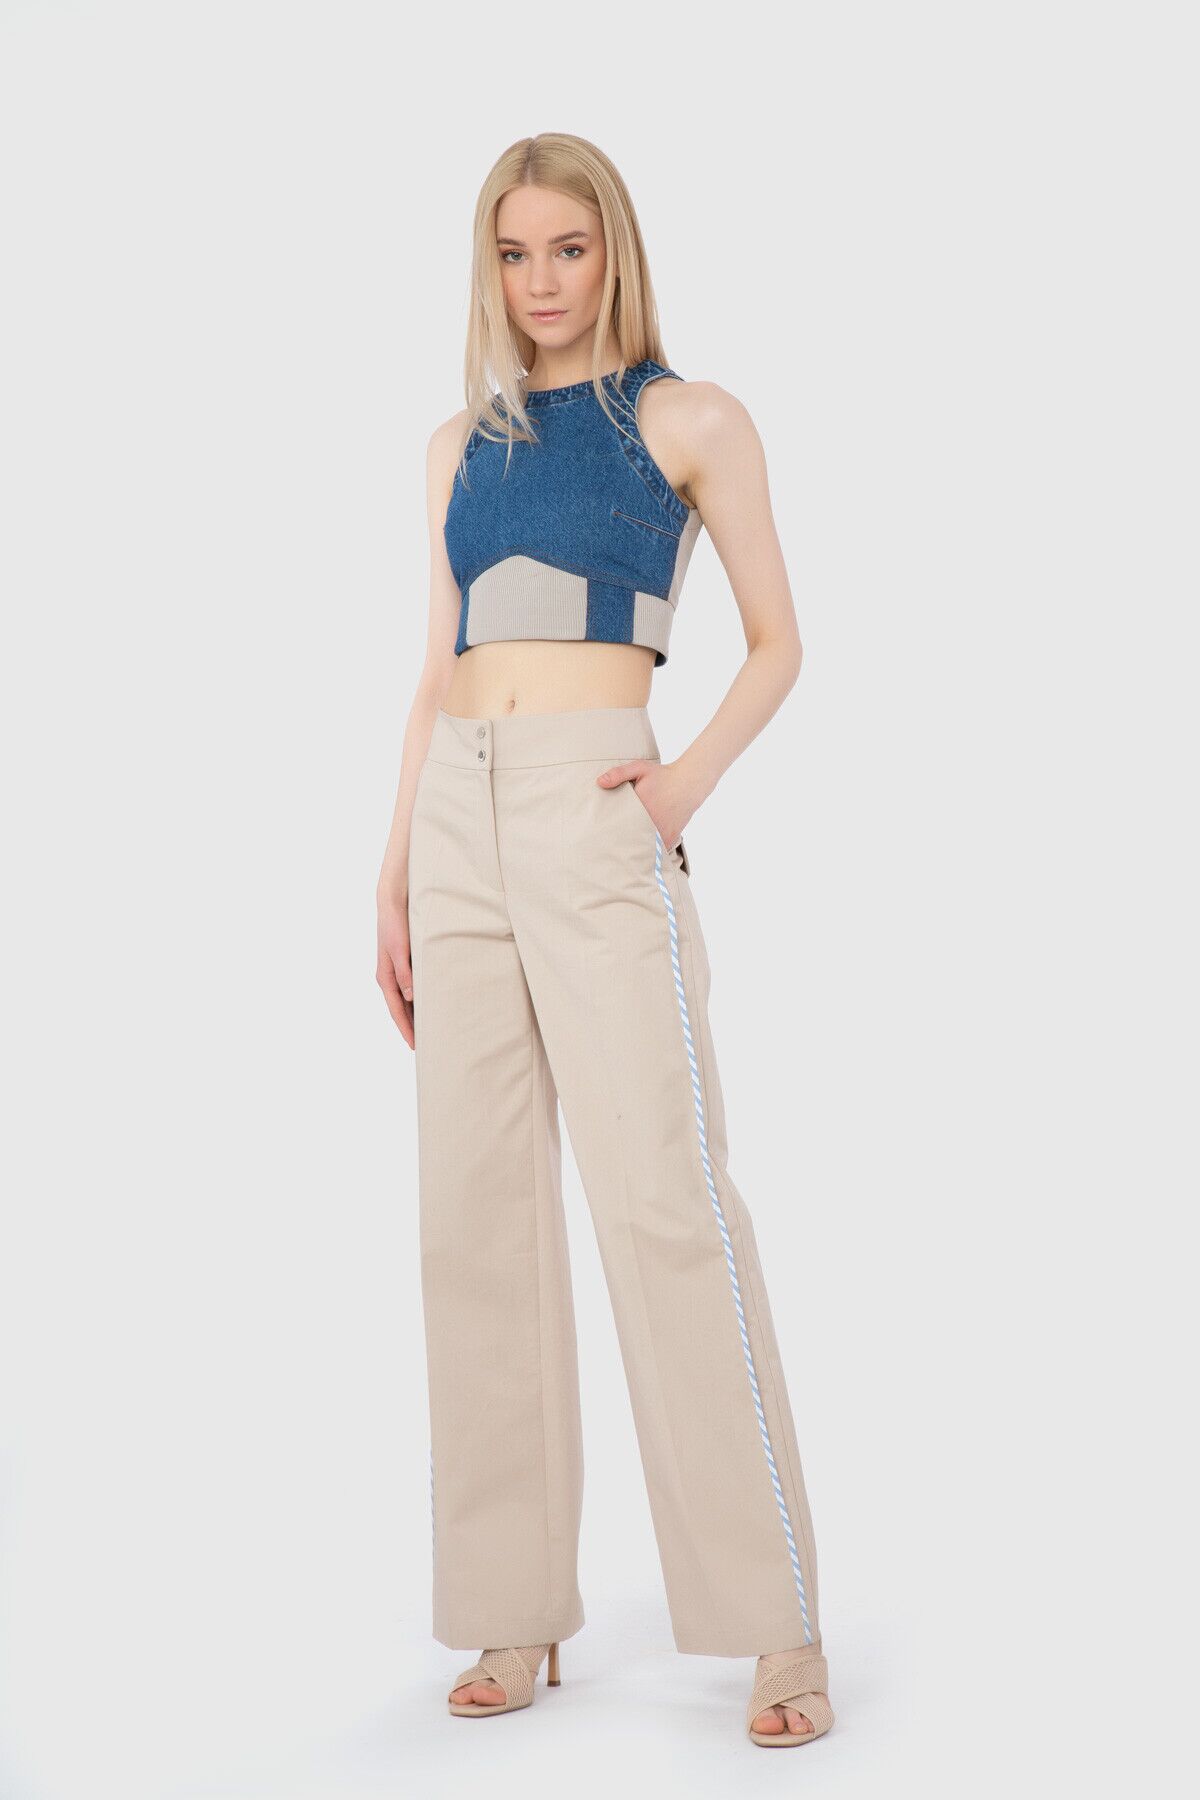 GIZIA SPORT - Kontrast Biye Detaylı Bej Pantolon